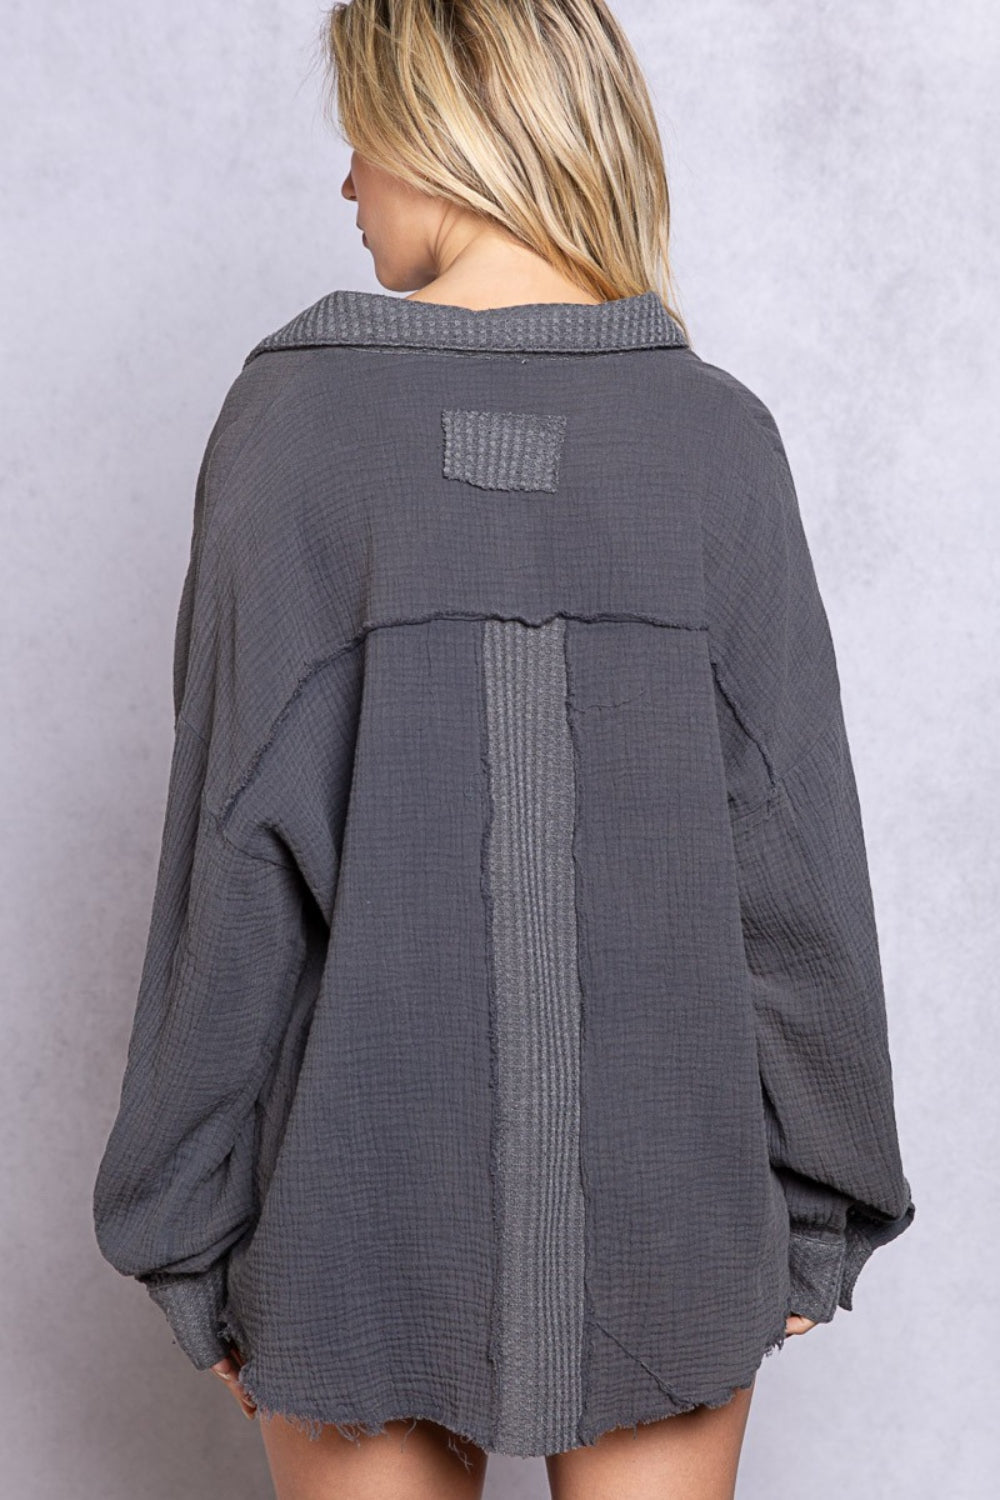 Dim Gray POL Texture Half Button Long Sleeve Top Sentient Beauty Fashions Apaparel & Accessories